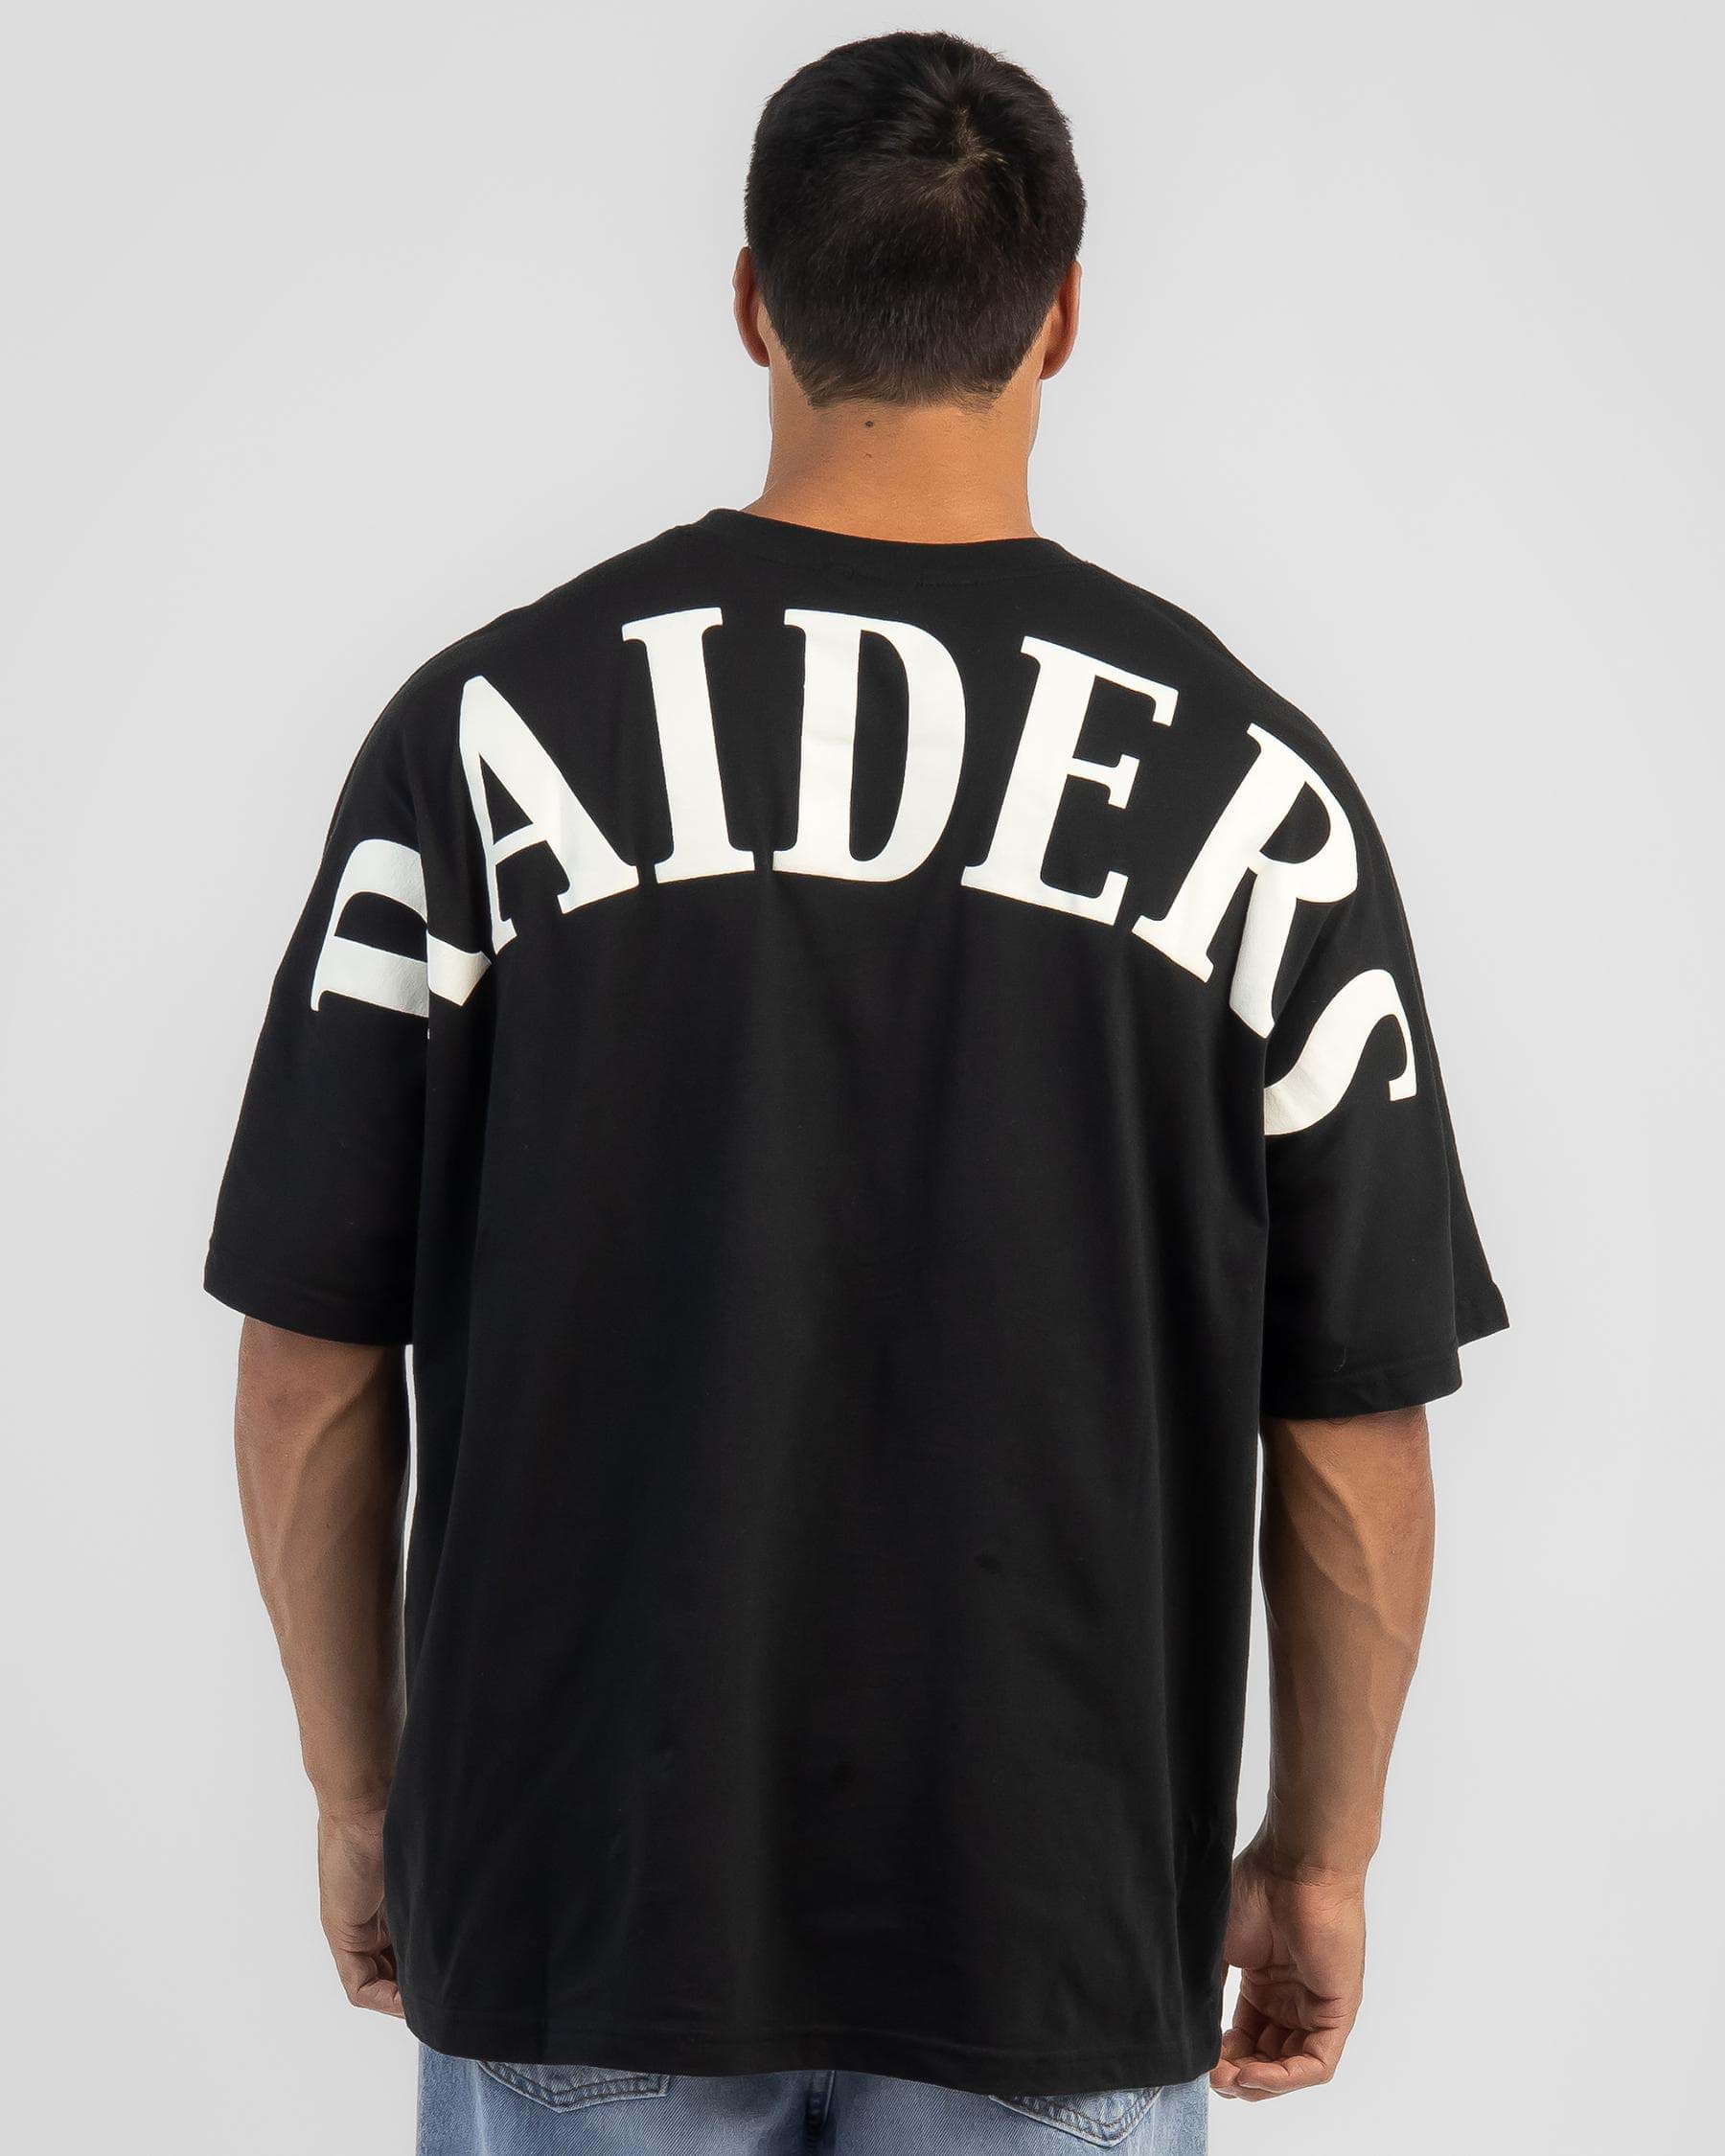 Majestic Jersey Raiders T-Shirt  Raiders t shirt, Mens shirts